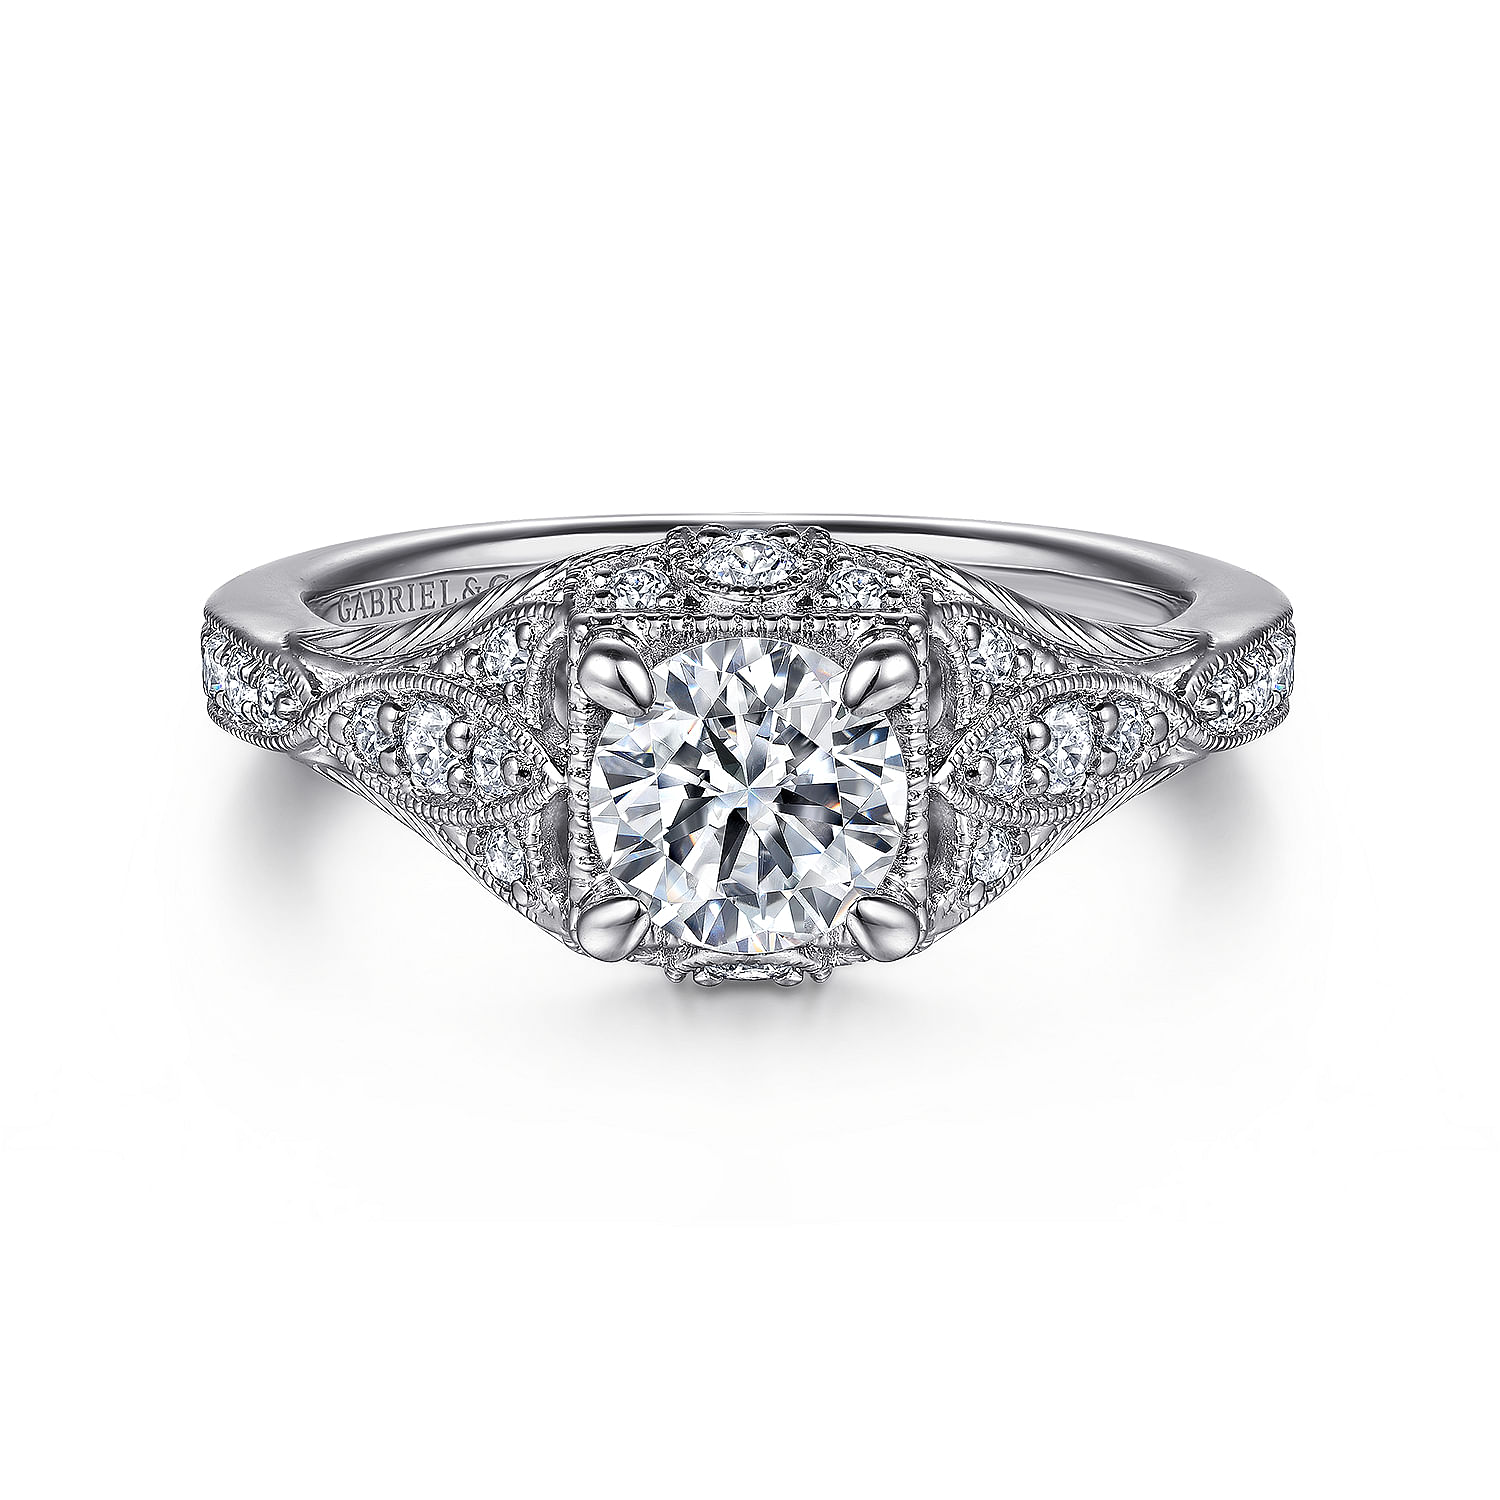 Gabriel - Unique 14K White Gold Vintage Inspired Diamond Halo Engagement Ring